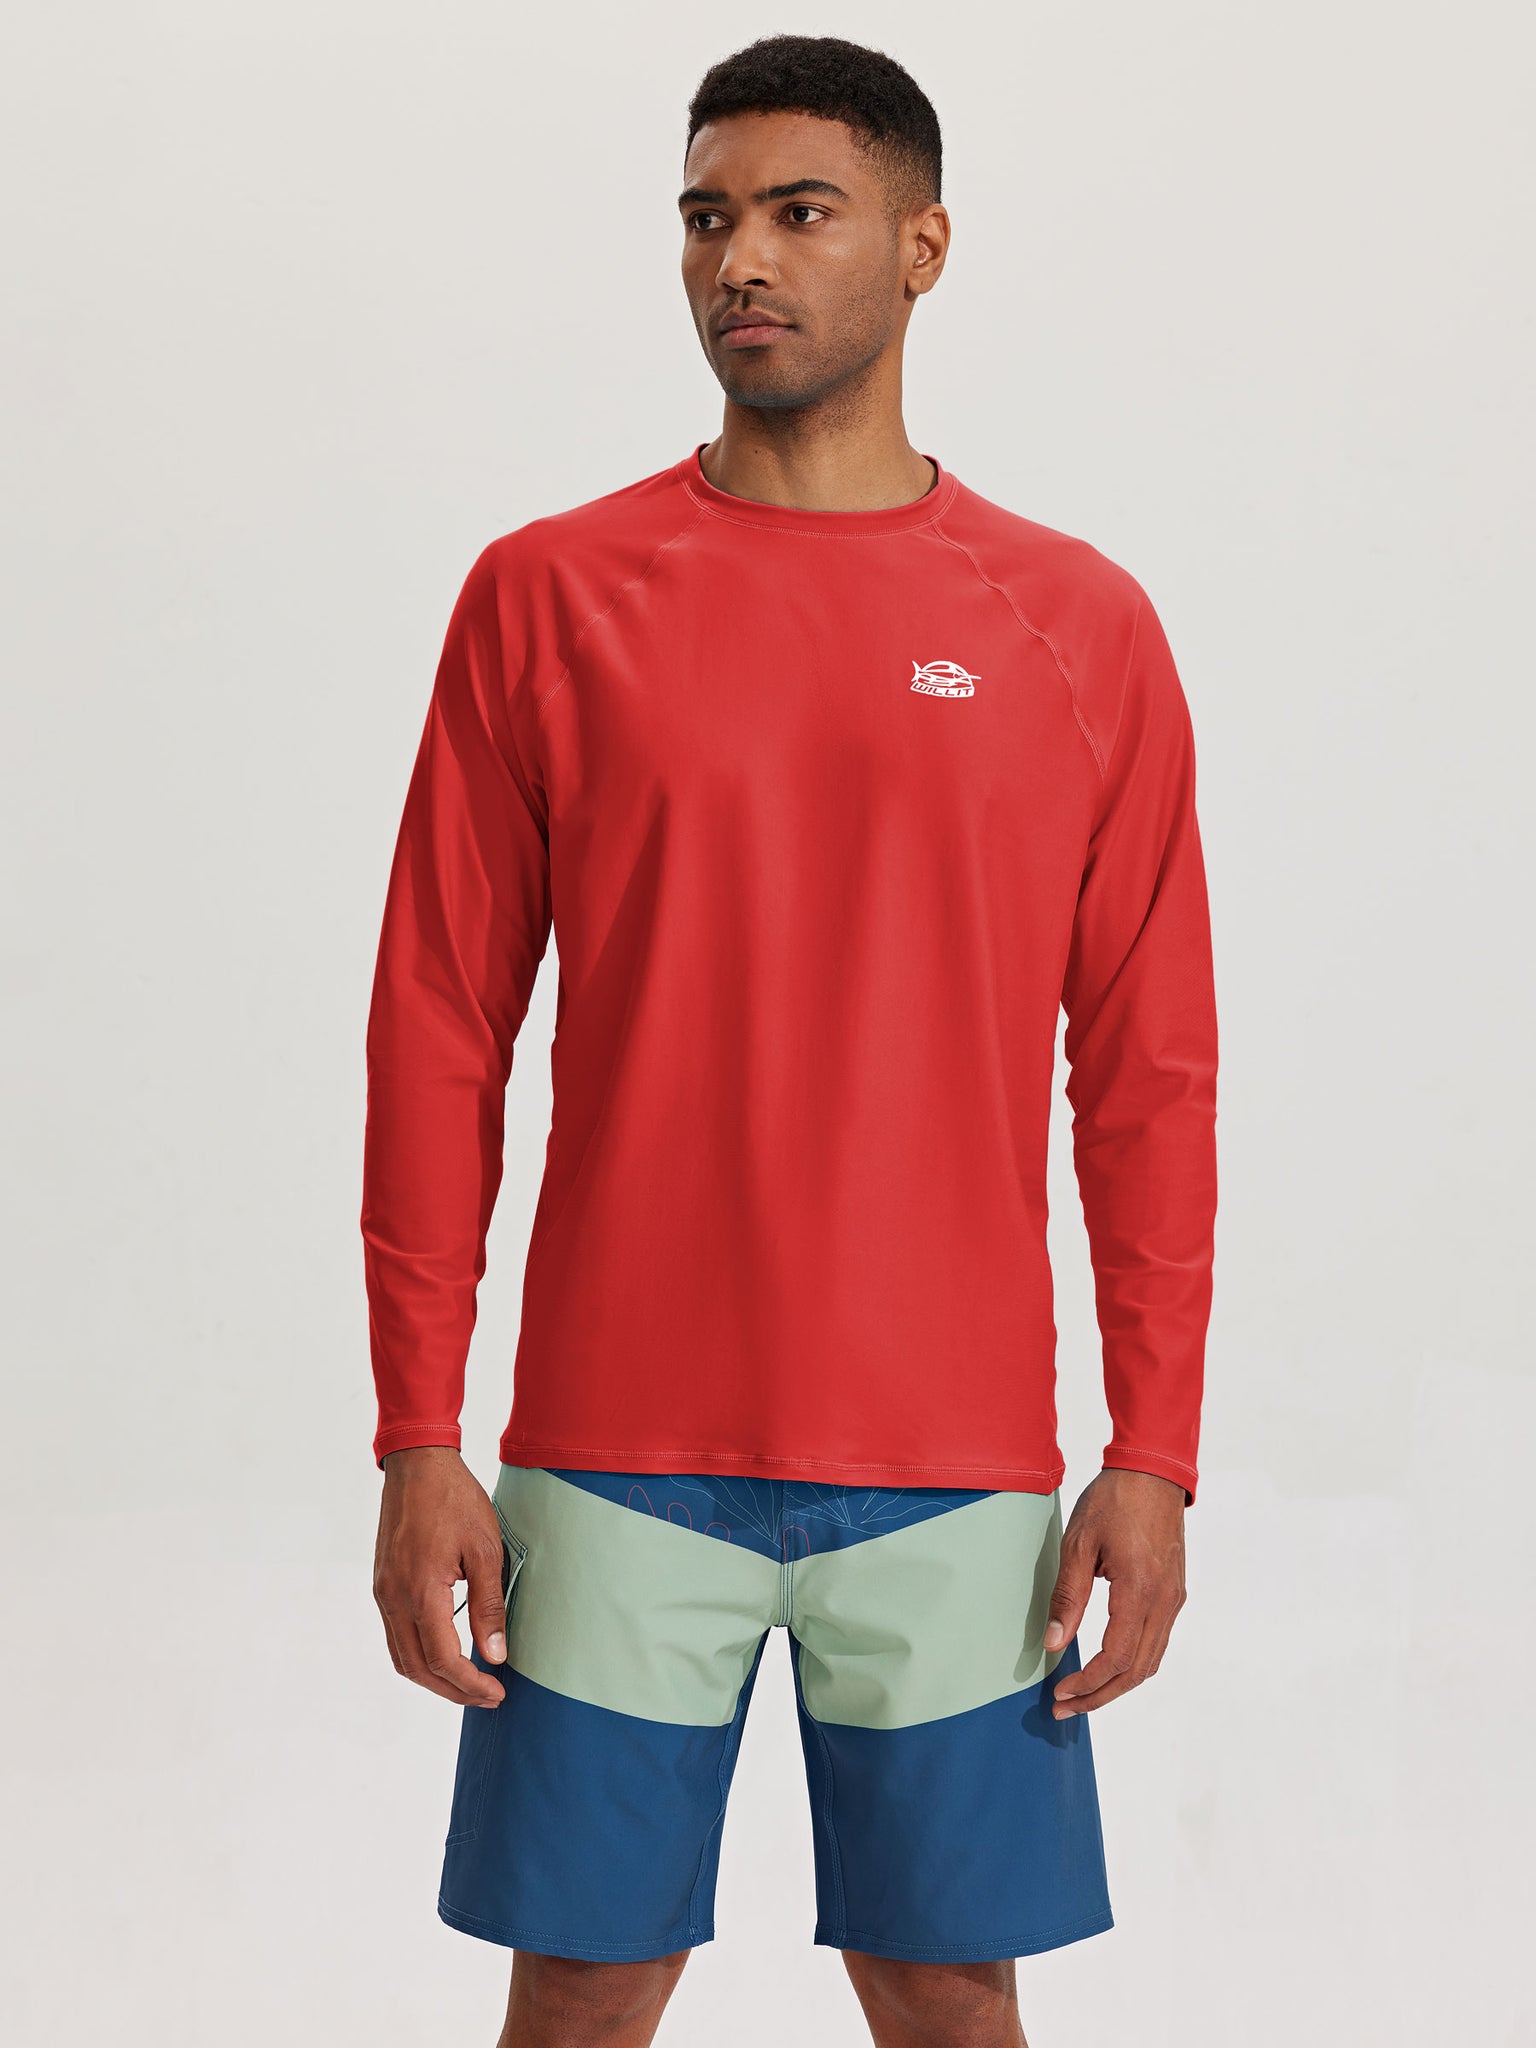 Men's Sun Protection Long Sleeve Shirt_Red_model2